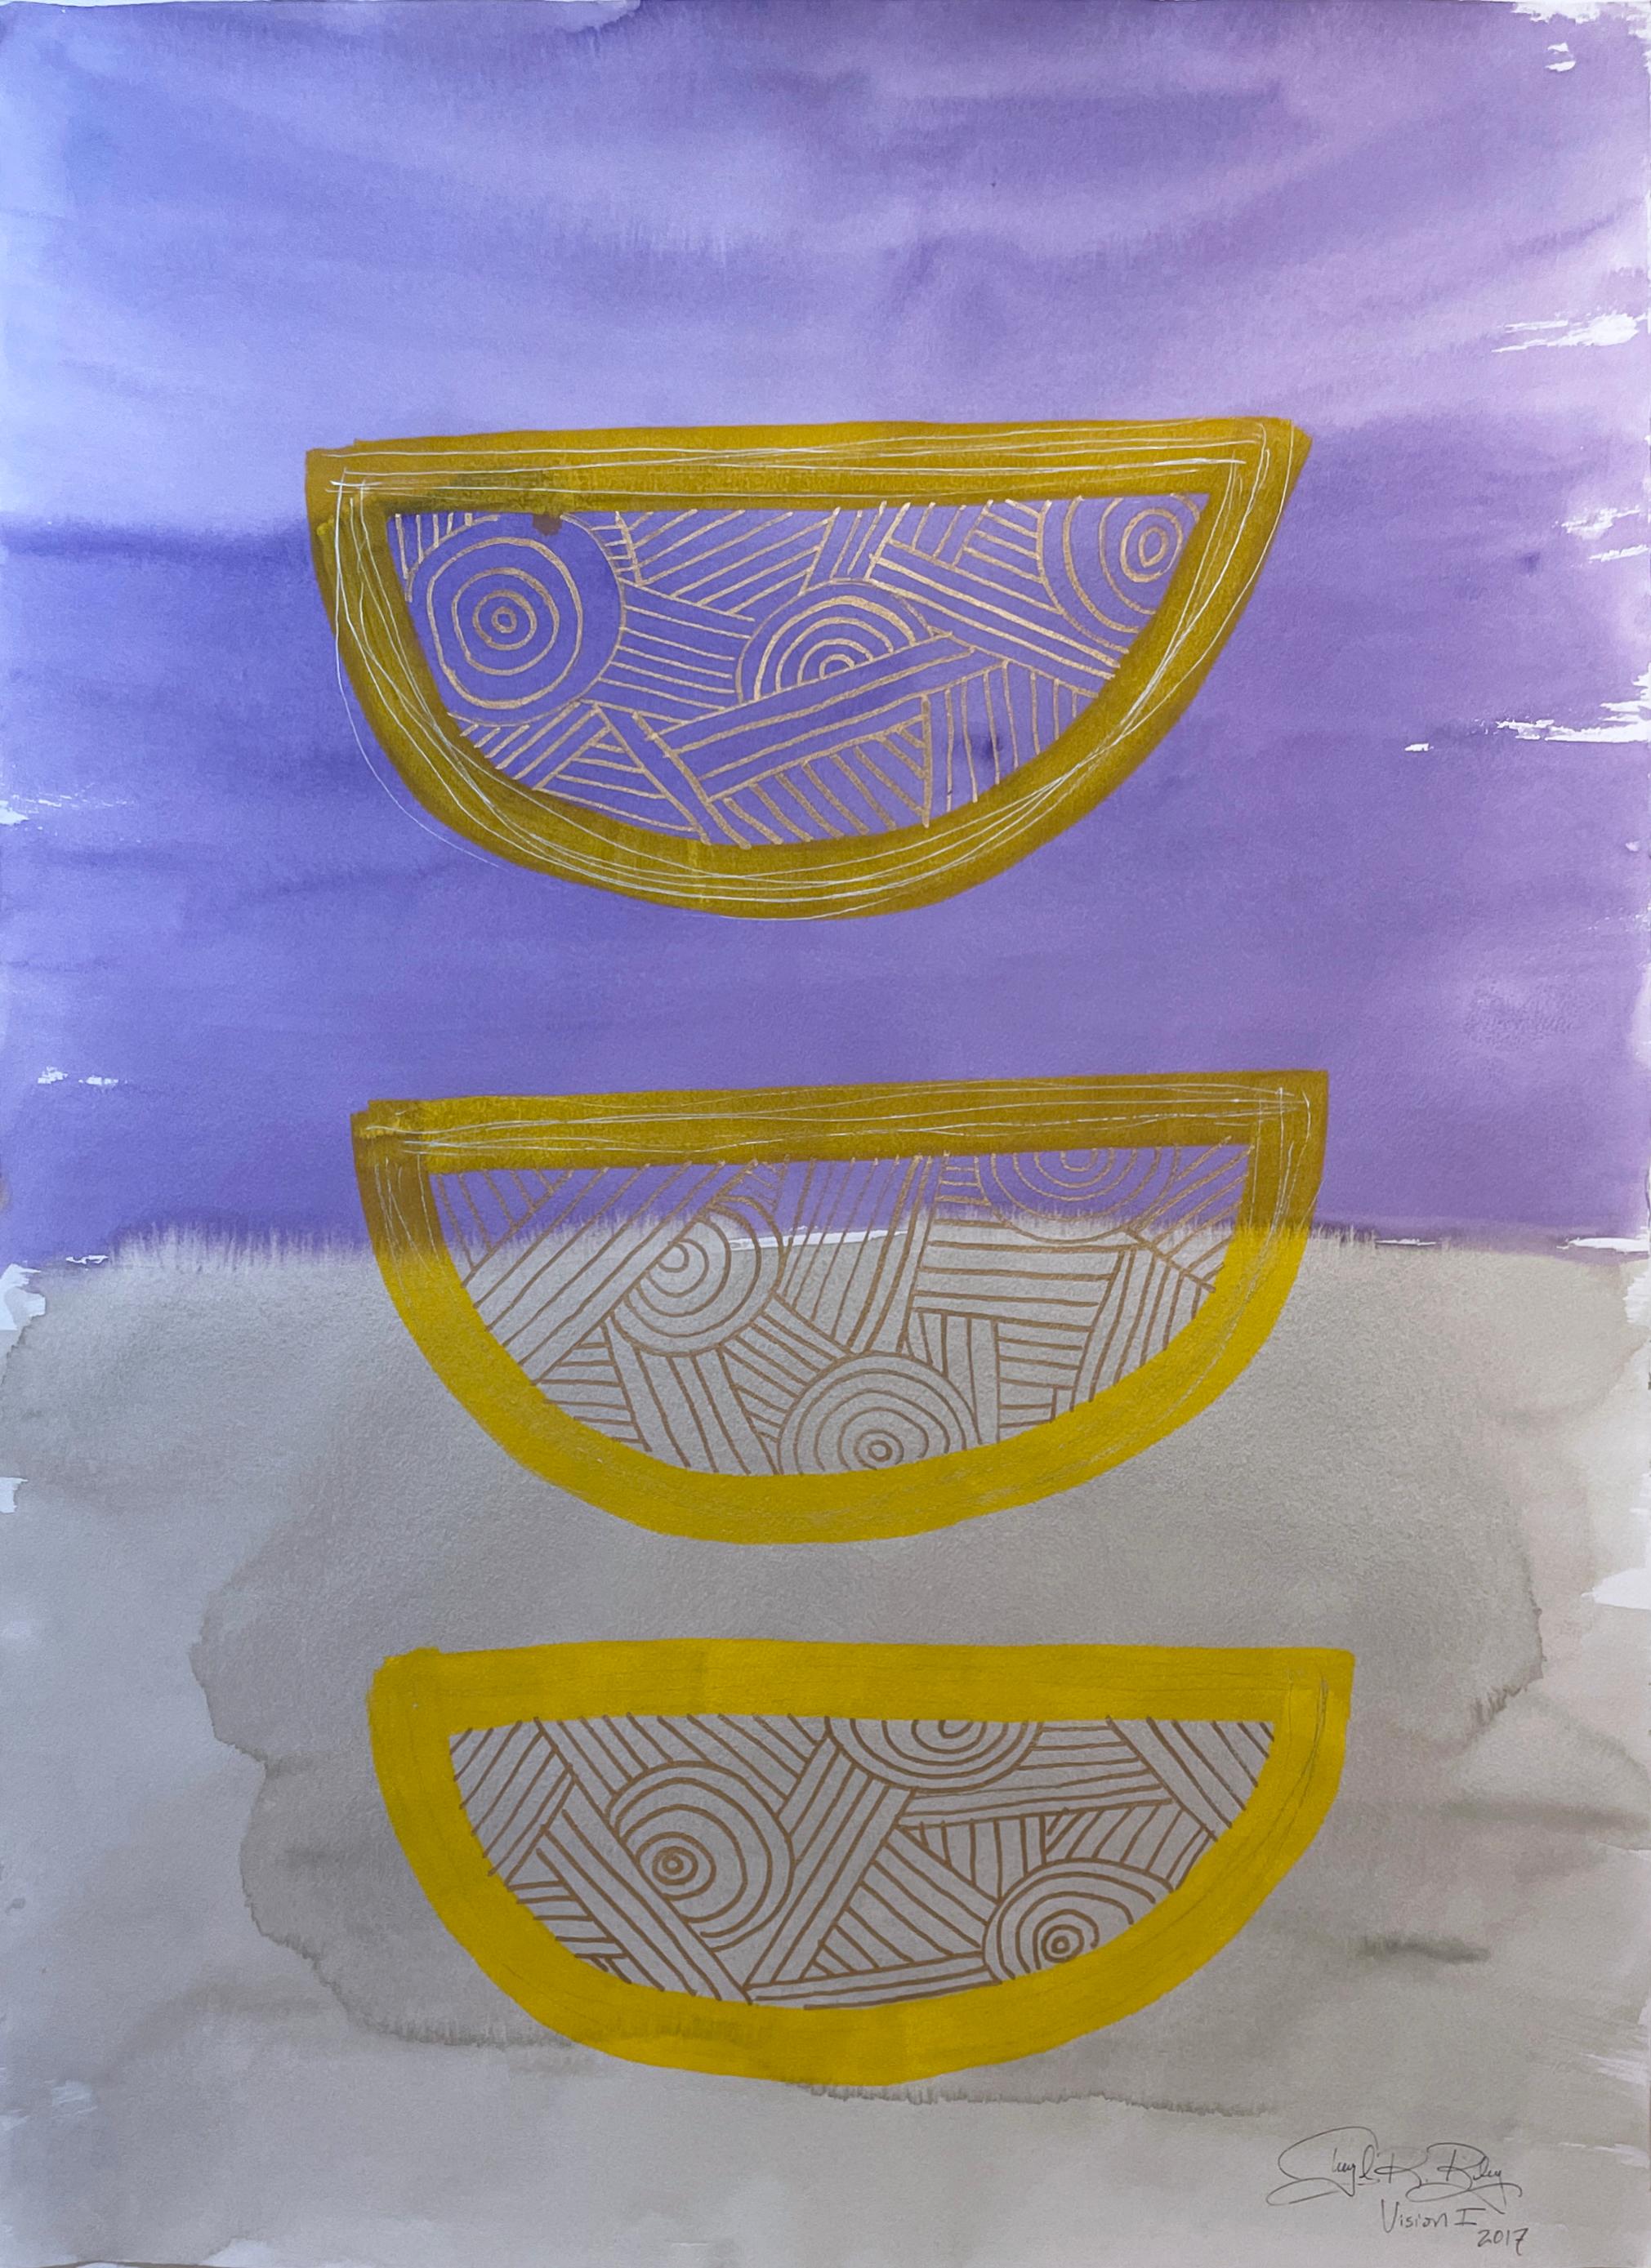 Vision I by Cheryl R. Riley, purple, gray, gold abstract geometric symbols